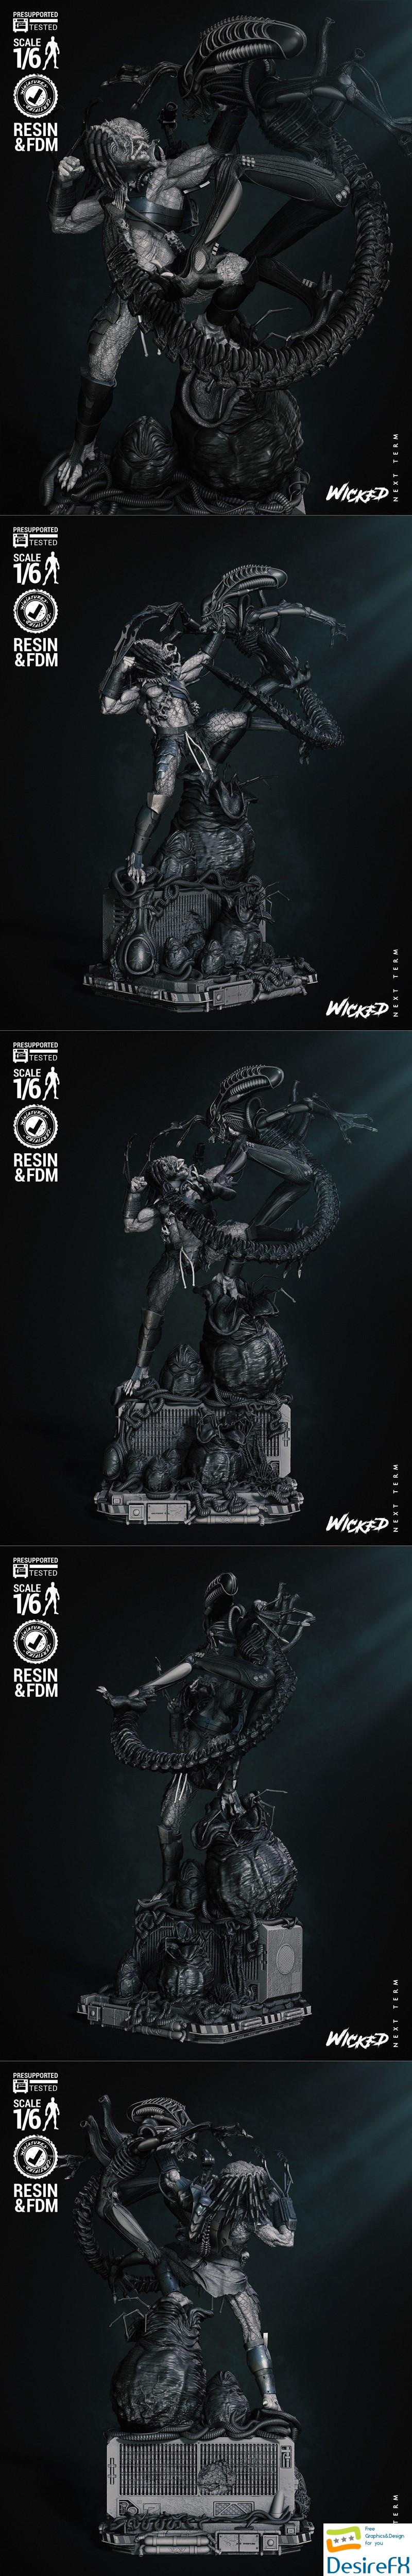 Wicked - Predator and Alien Diorama 3D Print